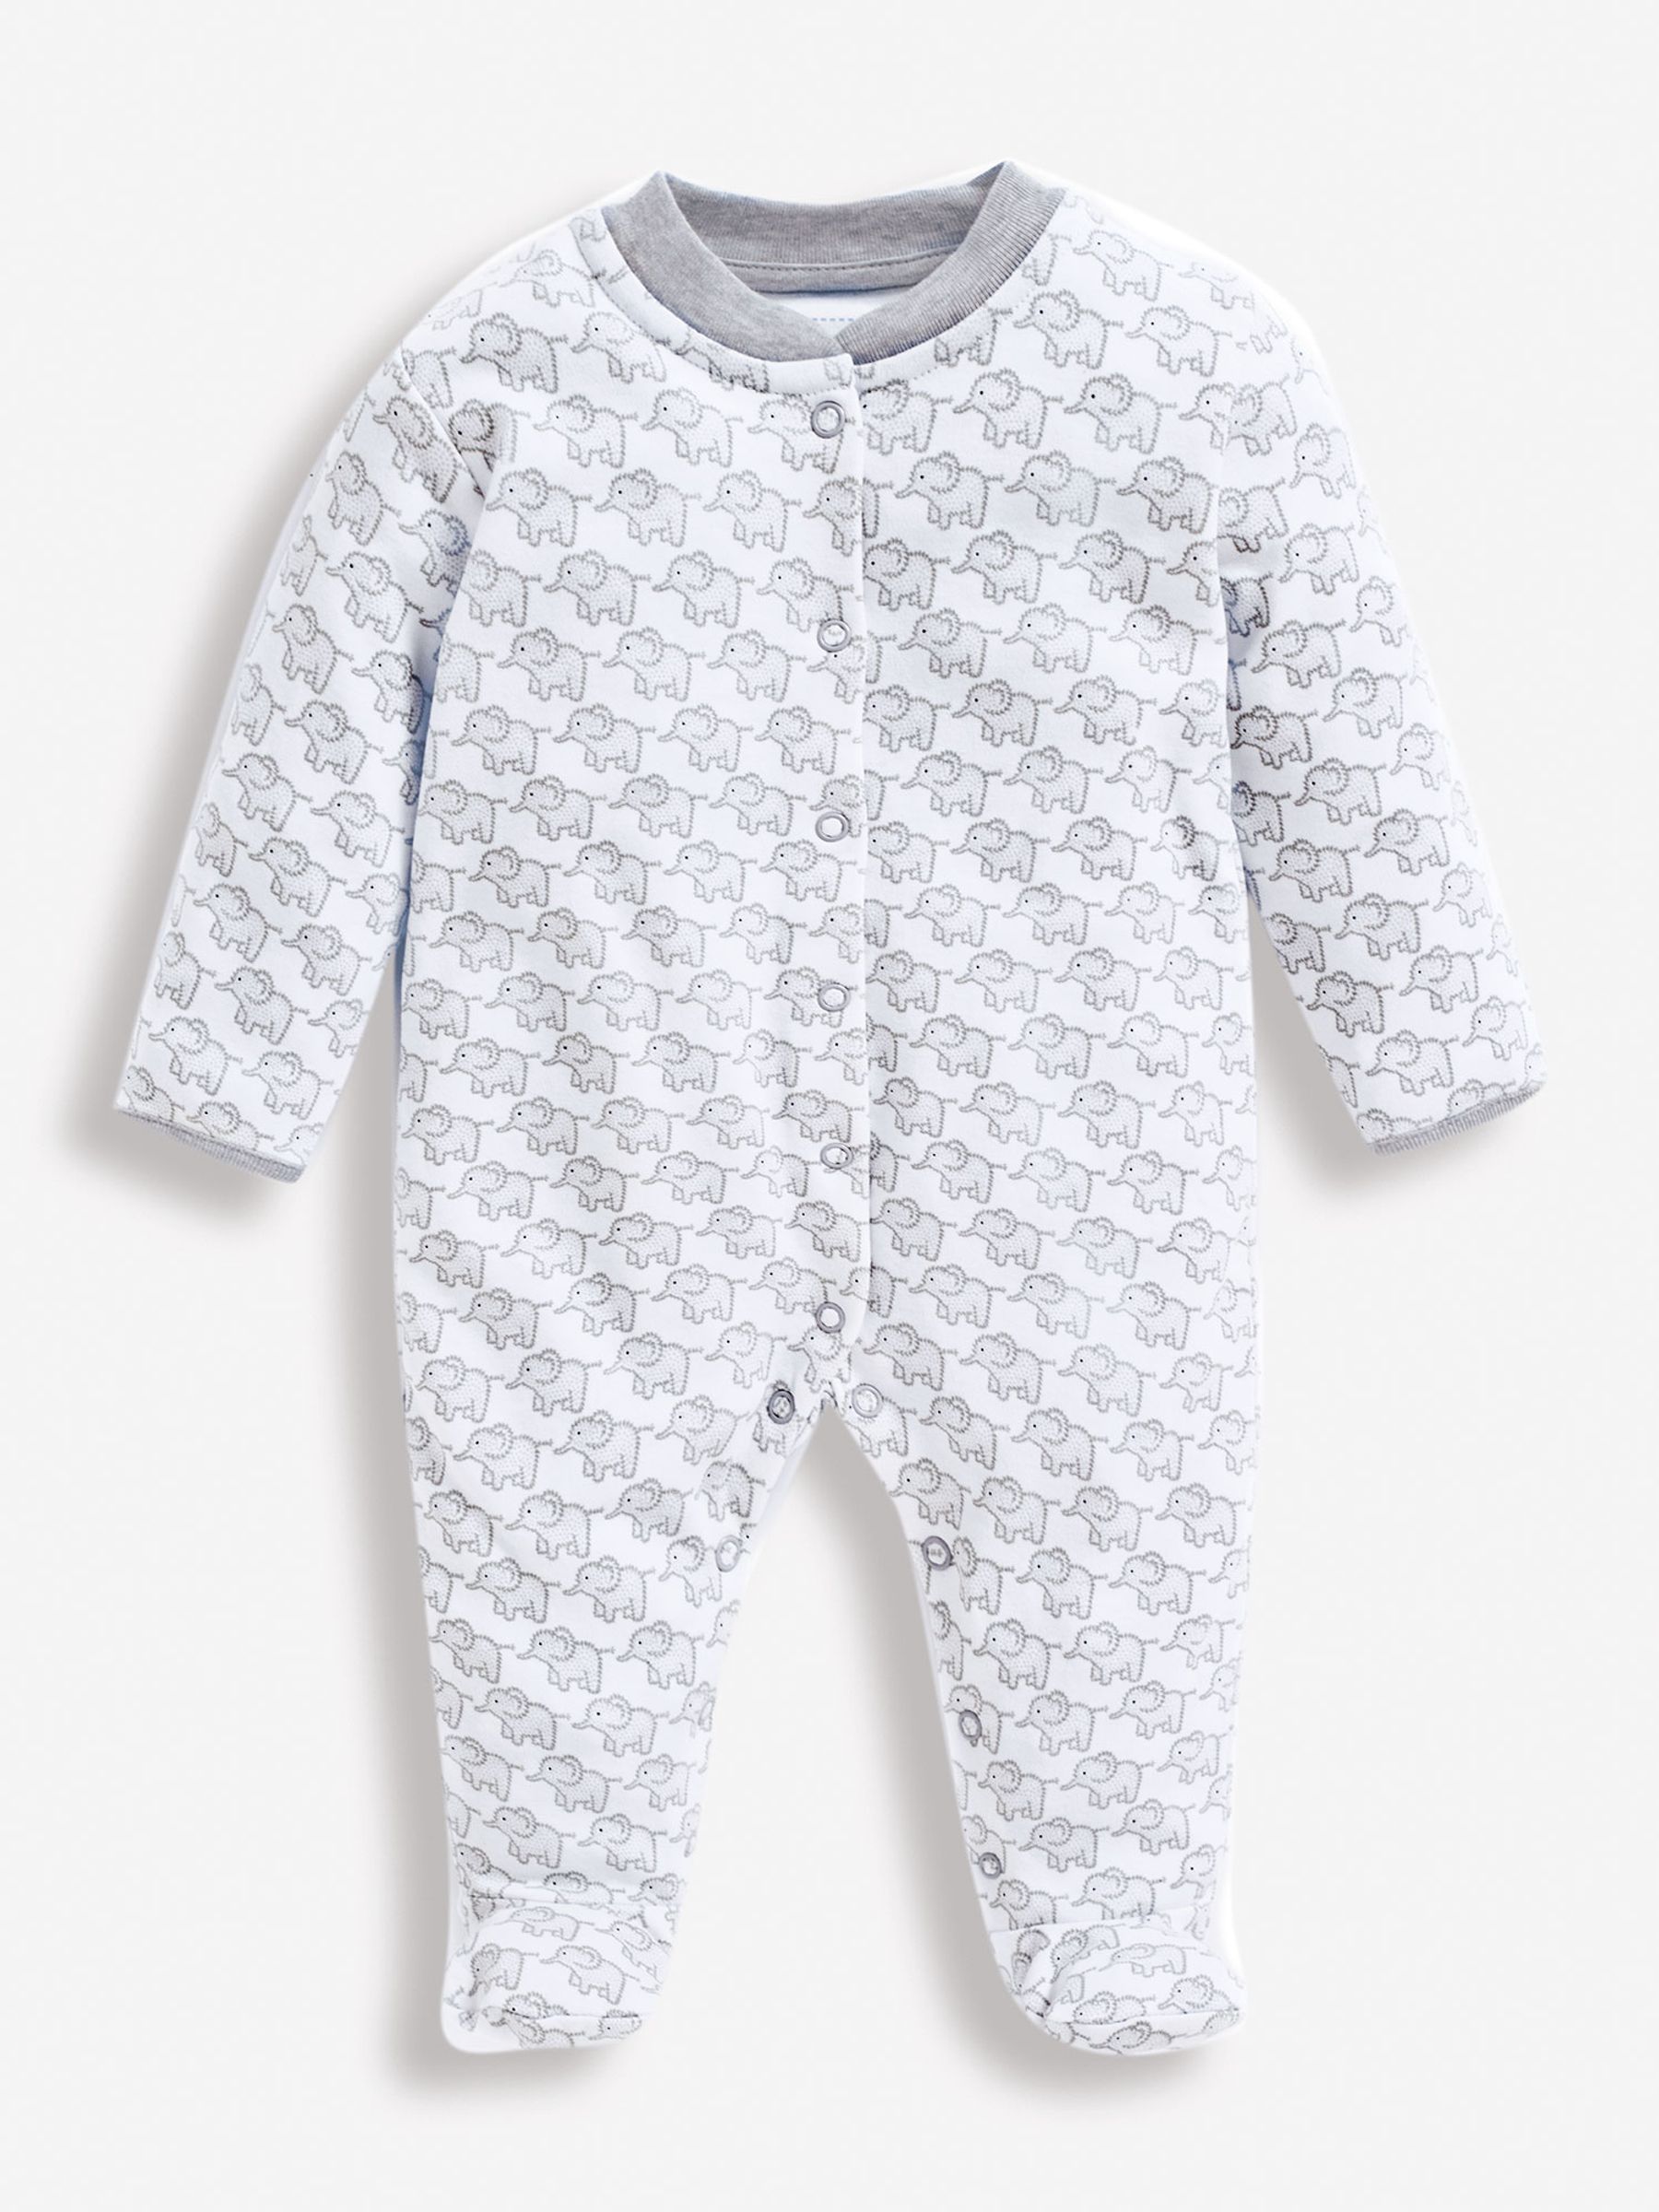 Buy JoJo Maman Bébé Little Elephant Cotton Baby Sleepsuit from the JoJo ...